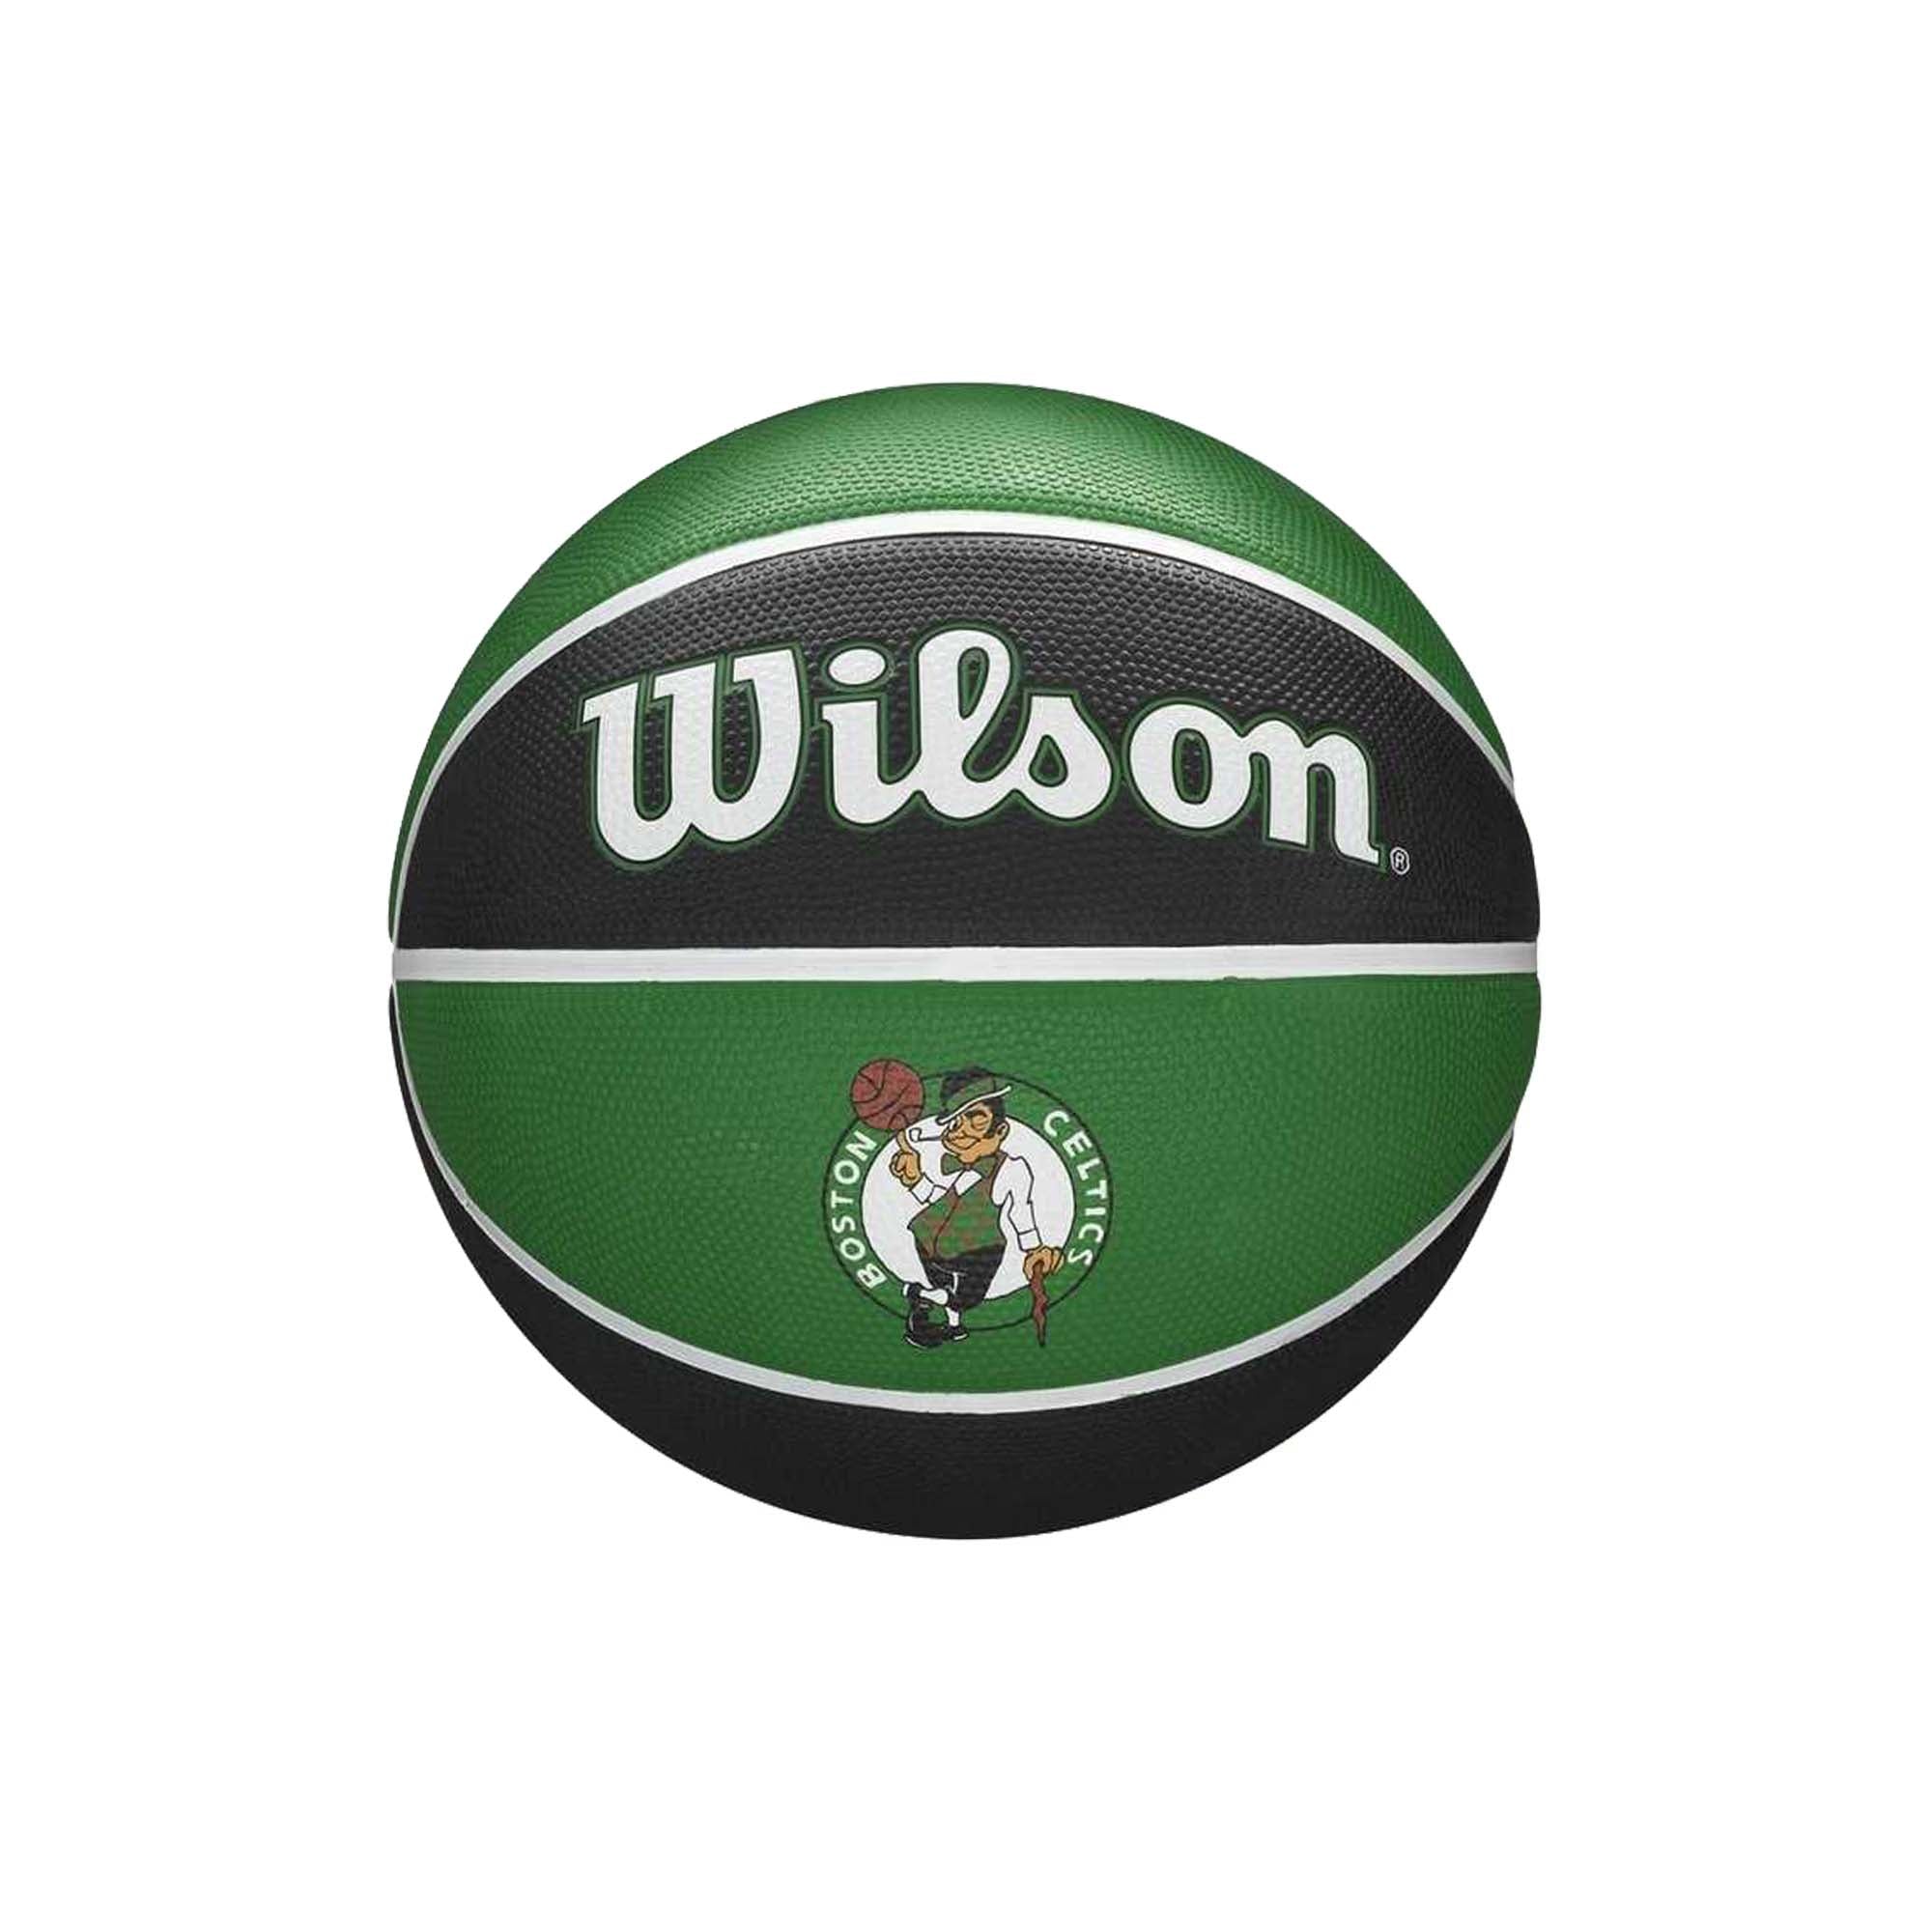 Wilson Basketbol Topu Nba Team Tribute Bos Celtics Size:7 WTB1300XBBOS